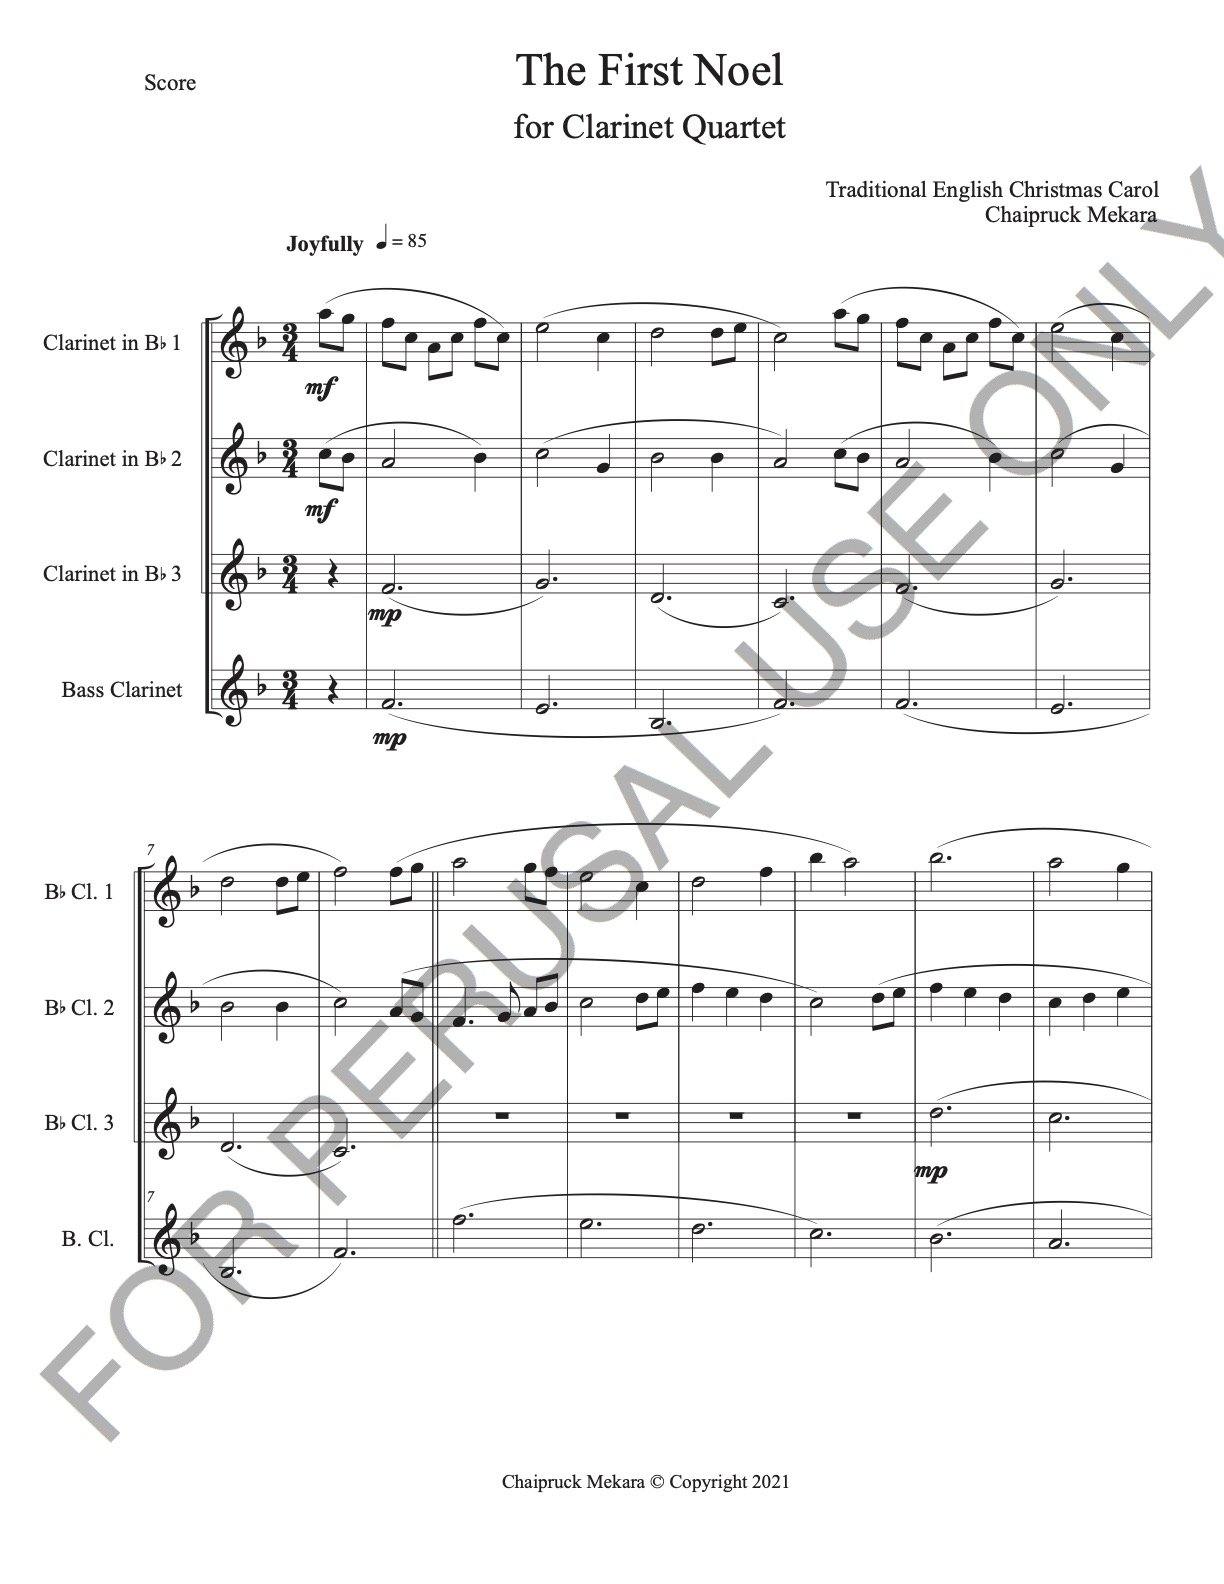 The First Noel for Clarinet Quartet - ChaipruckMekara